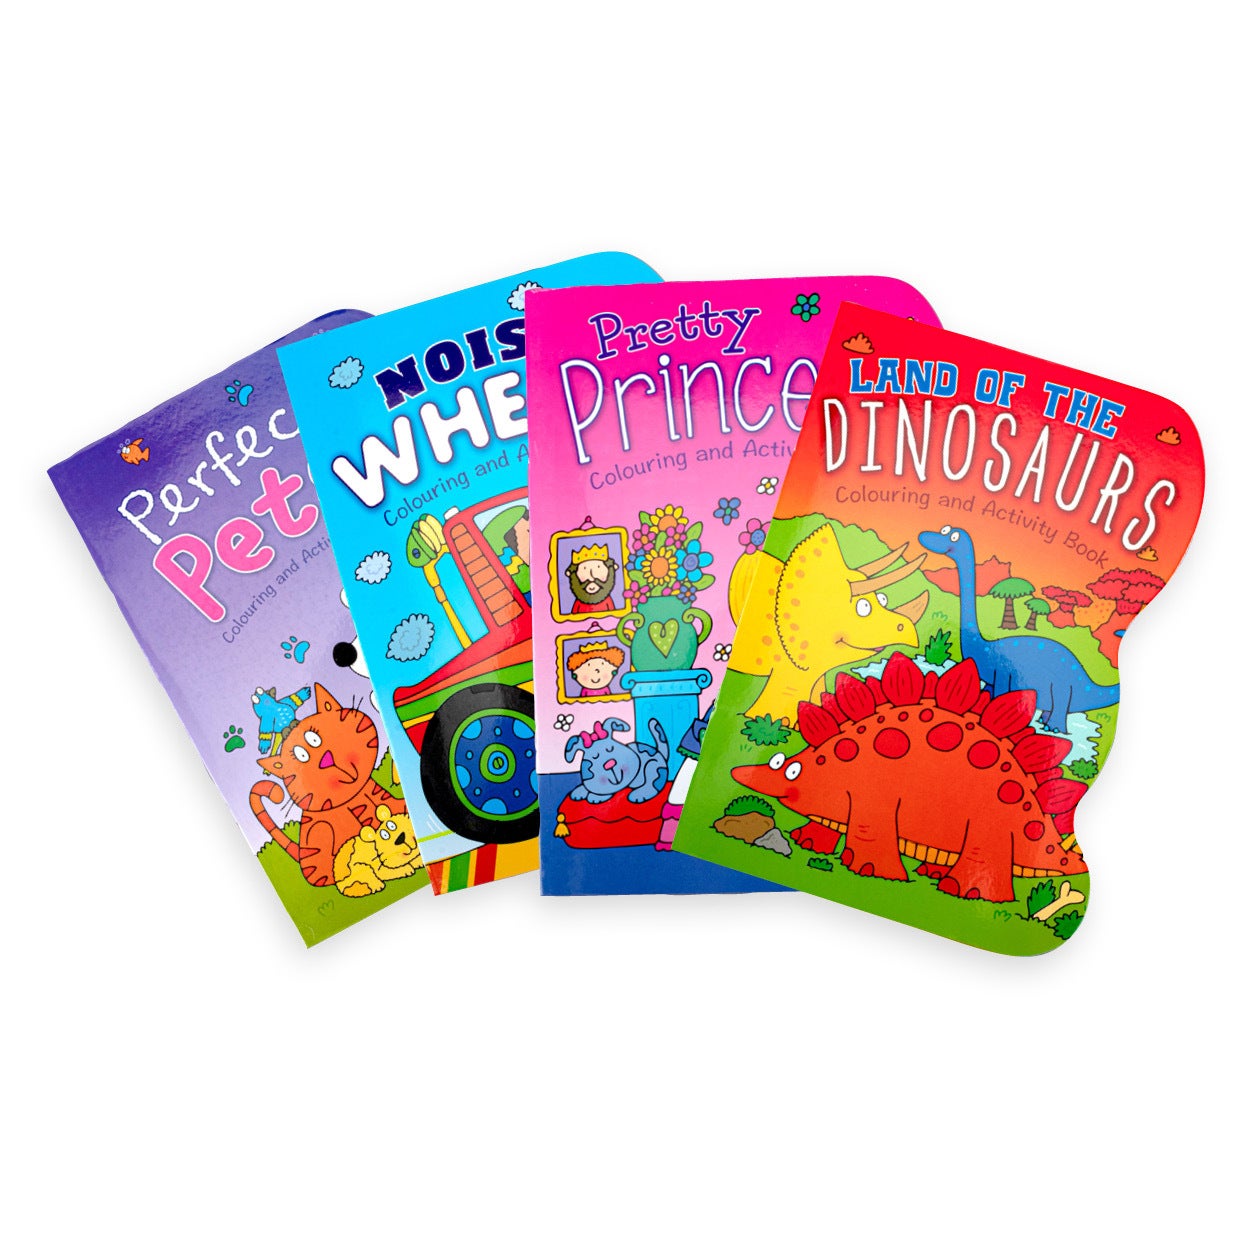 Office Central 4PK Colouring Books Die Cut Design Dinosaurs Princess Wheels Pets Fun 40PG